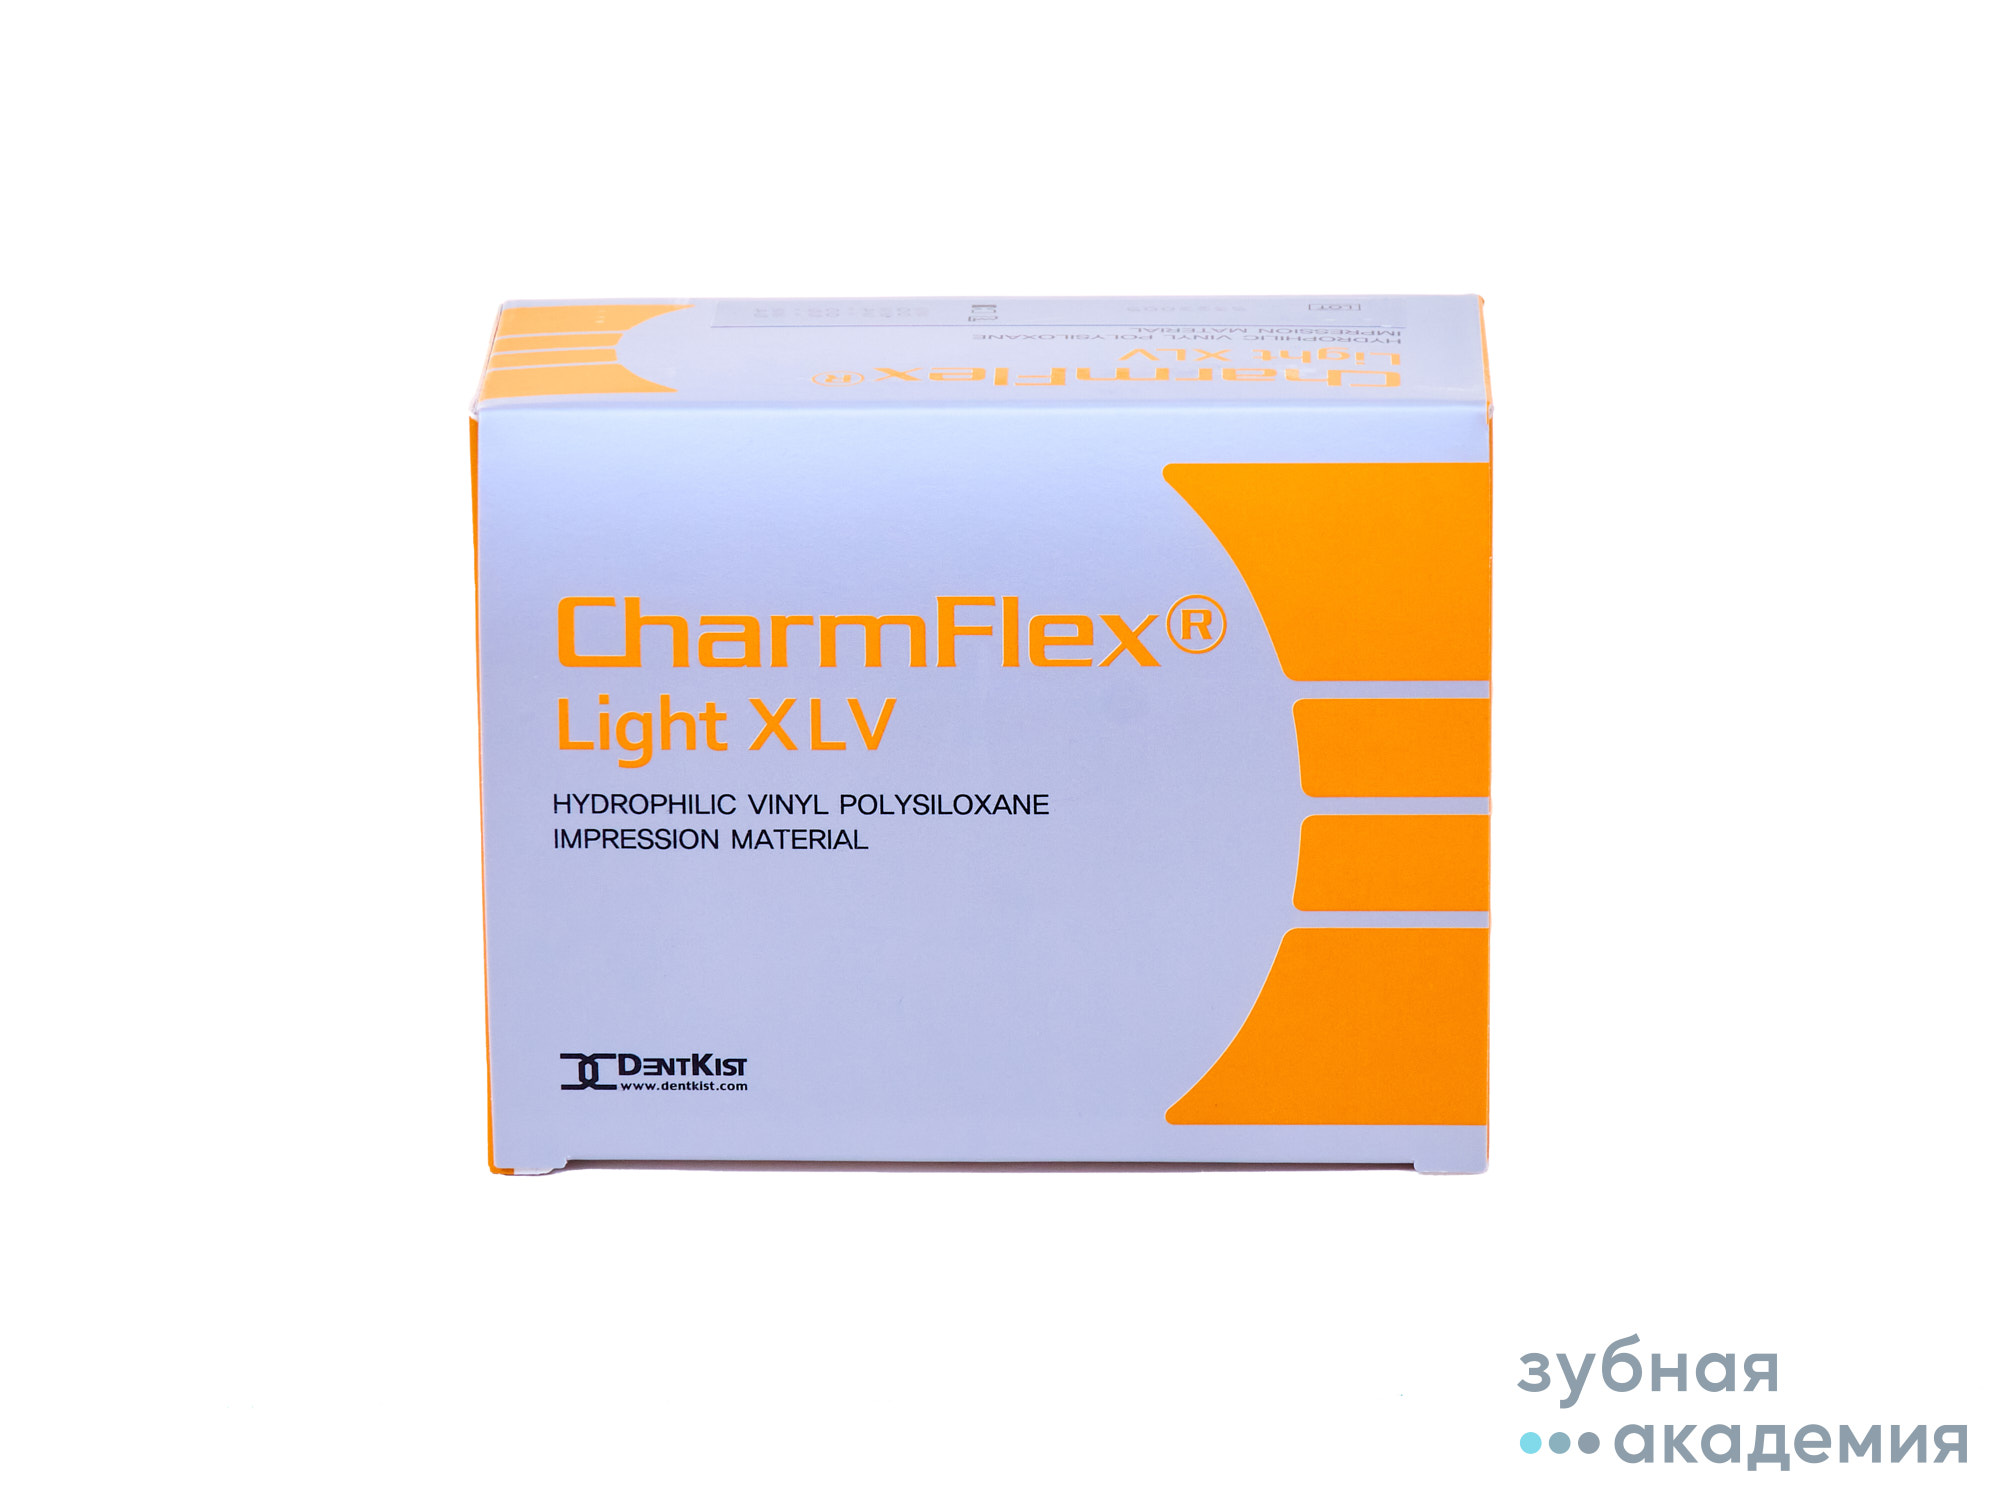 CharmFlex Light XLV/ЧамФлекс Лайт-ИКСЛВ упаковка 2 картр+6 након*50 мл/DentKist, Корея.